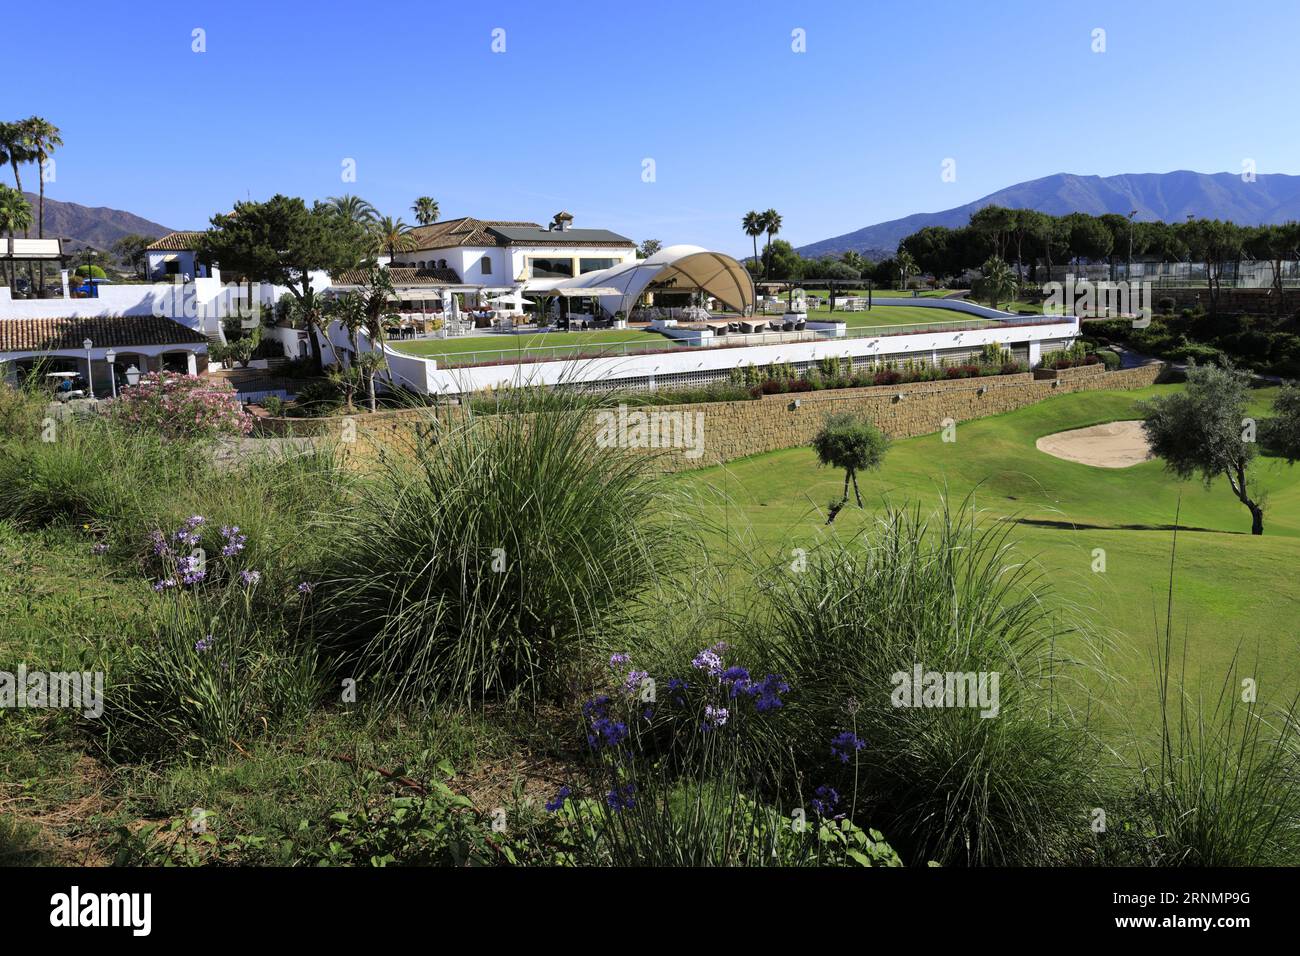 Vue sur la Cala golf Resort, Mirador del Golf, la Cala de Mijas, Málaga, Andalousie, Espagne Banque D'Images